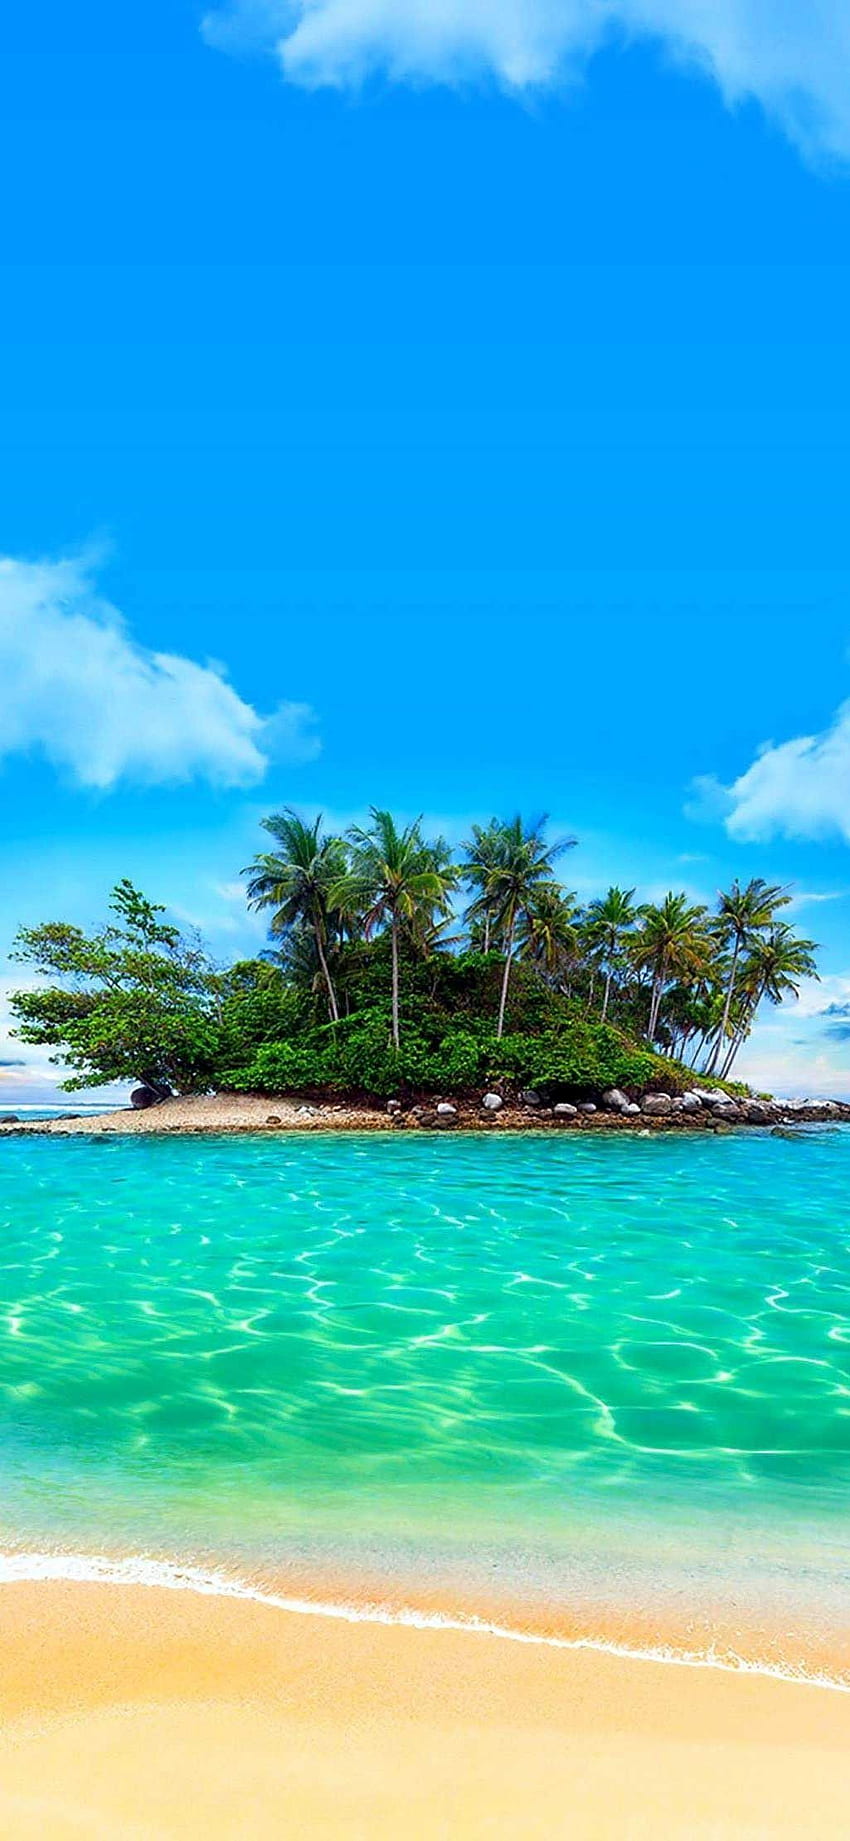 iPhone X playa isla isla tropical teléfono en 2020. Playa, Isla, Paraíso de playa, Island Vibes fondo de pantalla del teléfono